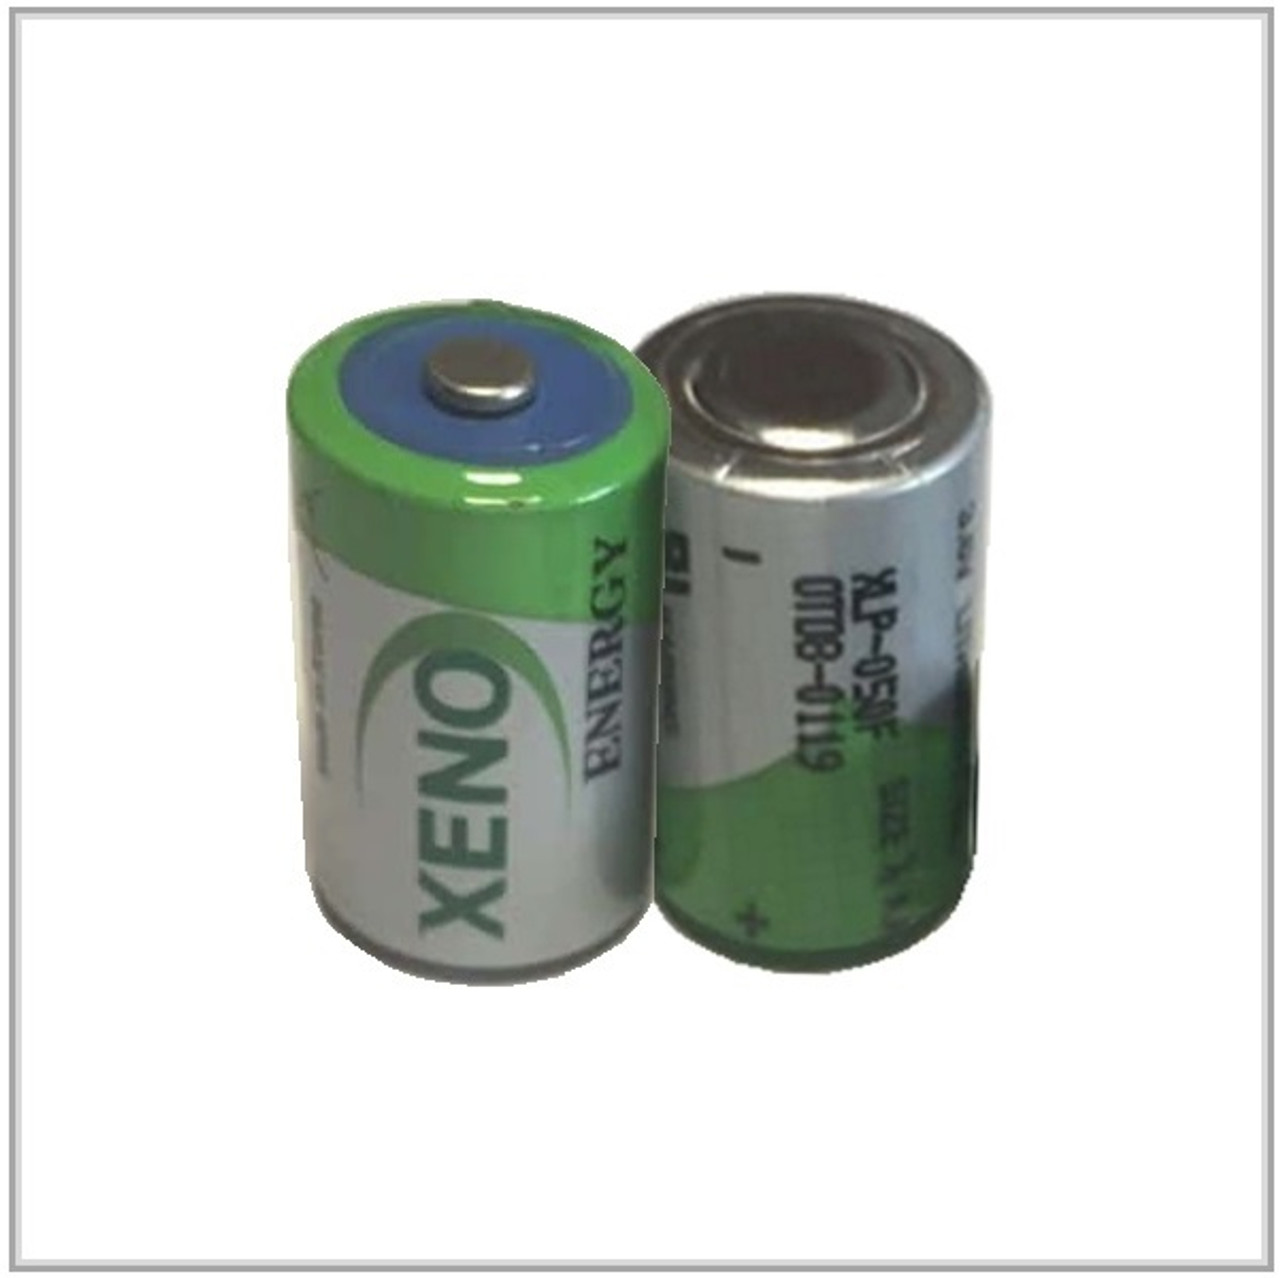 Tenergy D 3.6V 19Ah Lithium thionyl chloride Battery - Tenergy